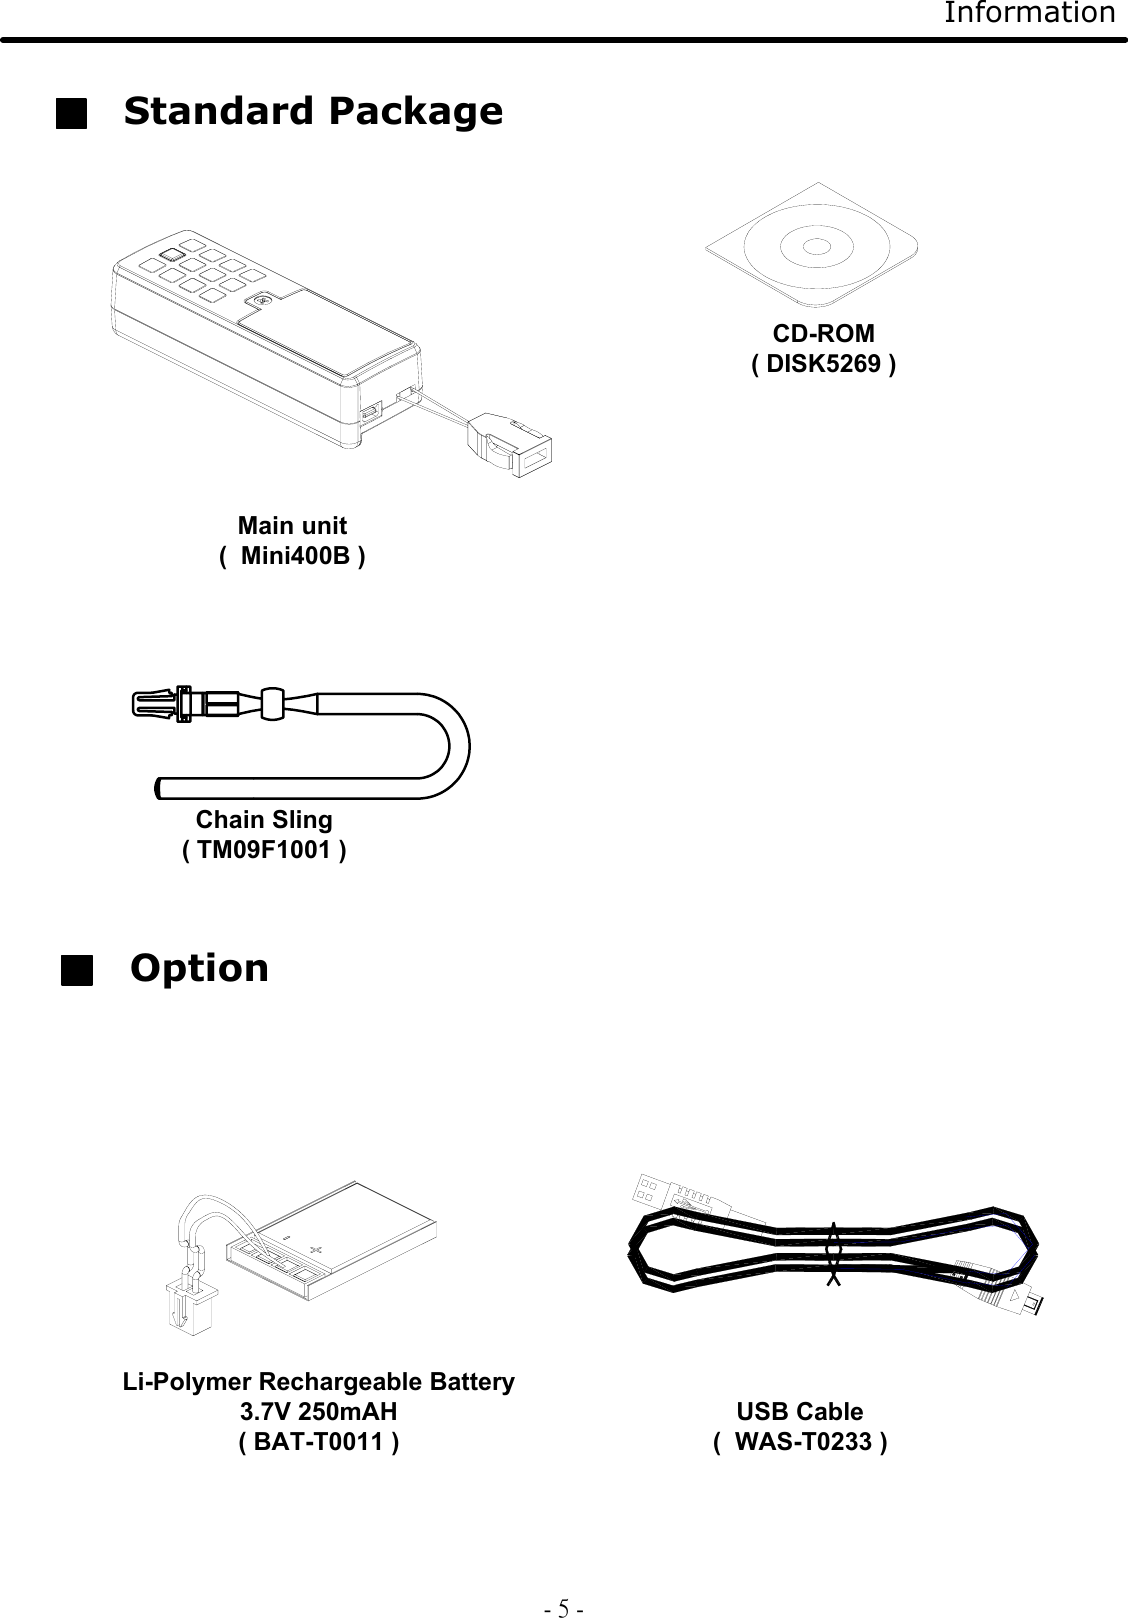 InformationStandard PackageMain unit(  Mini400B )Li-Polymer Rechargeable Battery 3.7V 250mAH( BAT-T0011 )Chain Sling( TM09F1001 )OptionUSB Cable(  WAS-T0233 )CD-ROM( DISK5269 )- 5 -